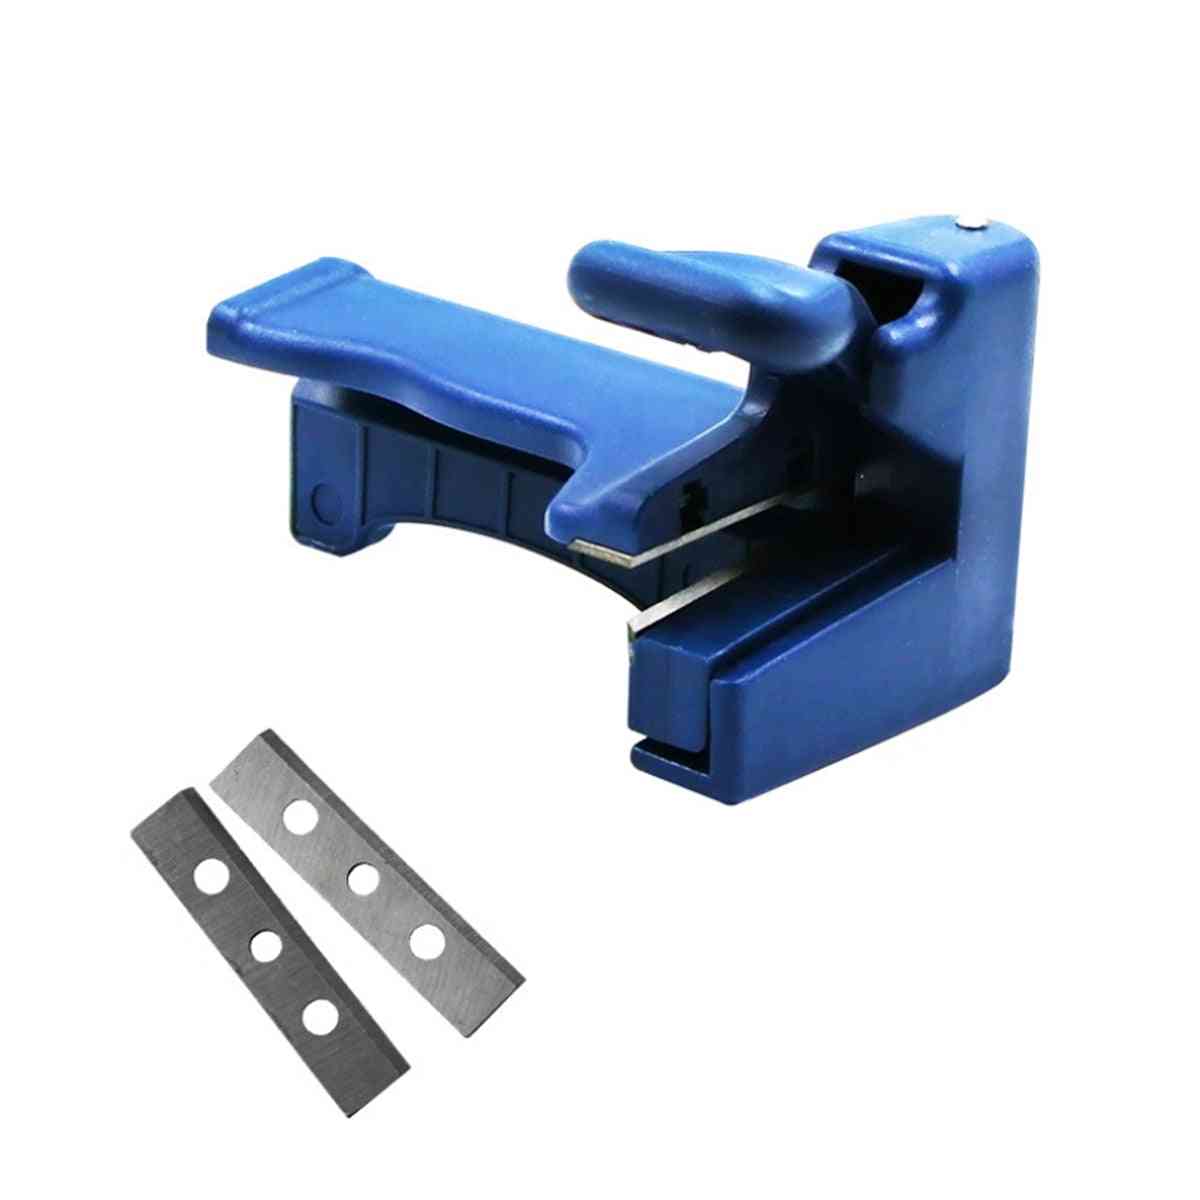 Trimmer Manual Edge Bending Cutter, Wood And Tail Carpenter Hardware Machine Set